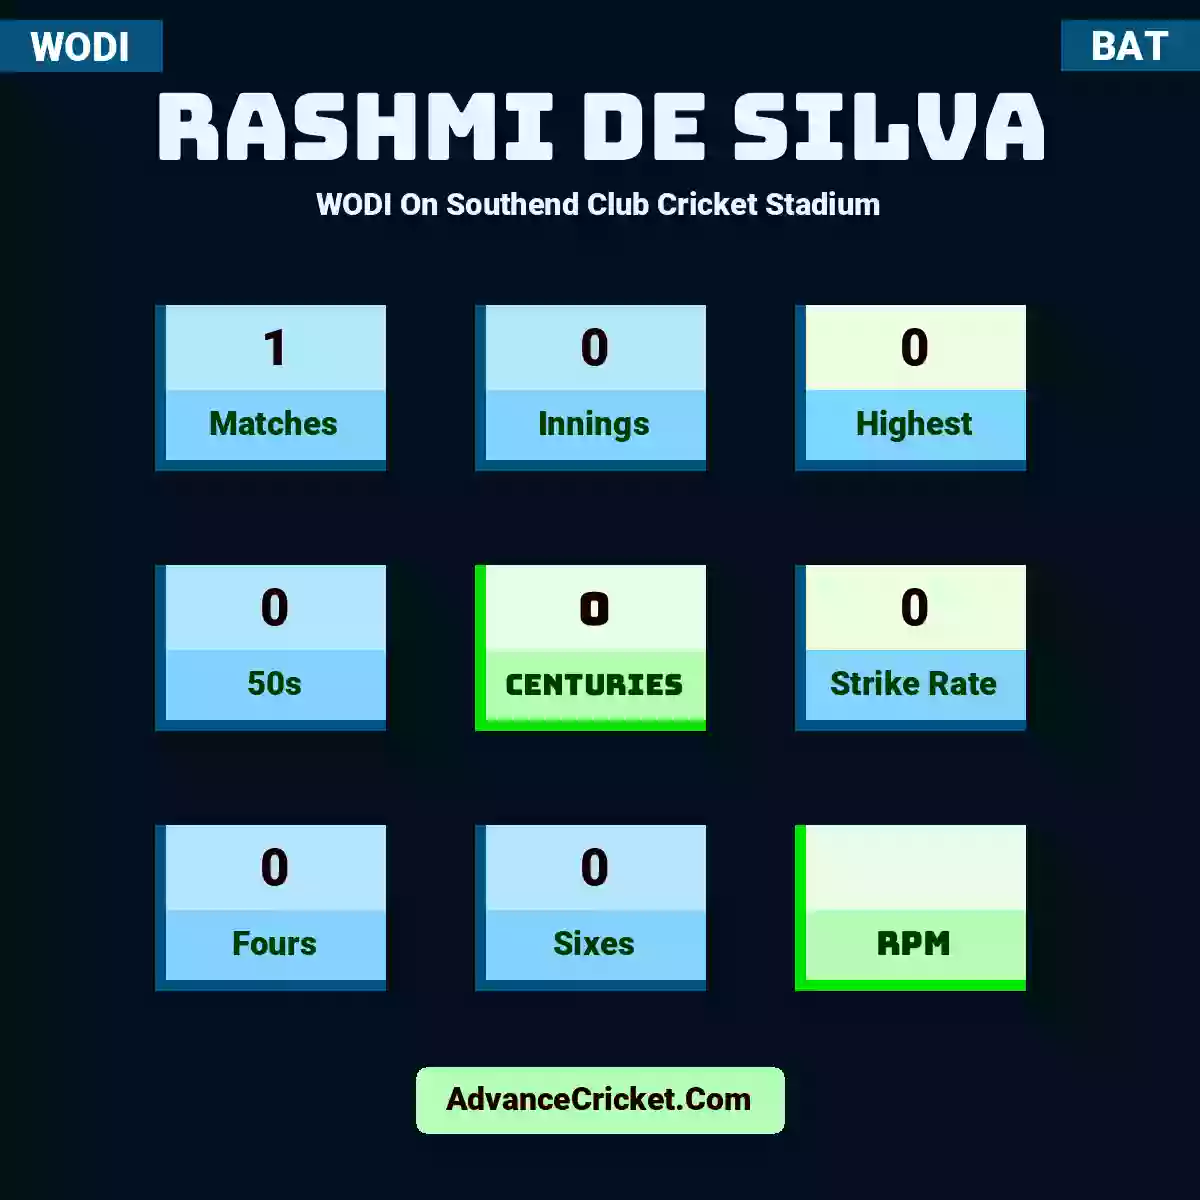 Rashmi De Silva WODI  On Southend Club Cricket Stadium, Rashmi De Silva played 1 matches, scored 0 runs as highest, 0 half-centuries, and 0 centuries, with a strike rate of 0. R.Silva hit 0 fours and 0 sixes.